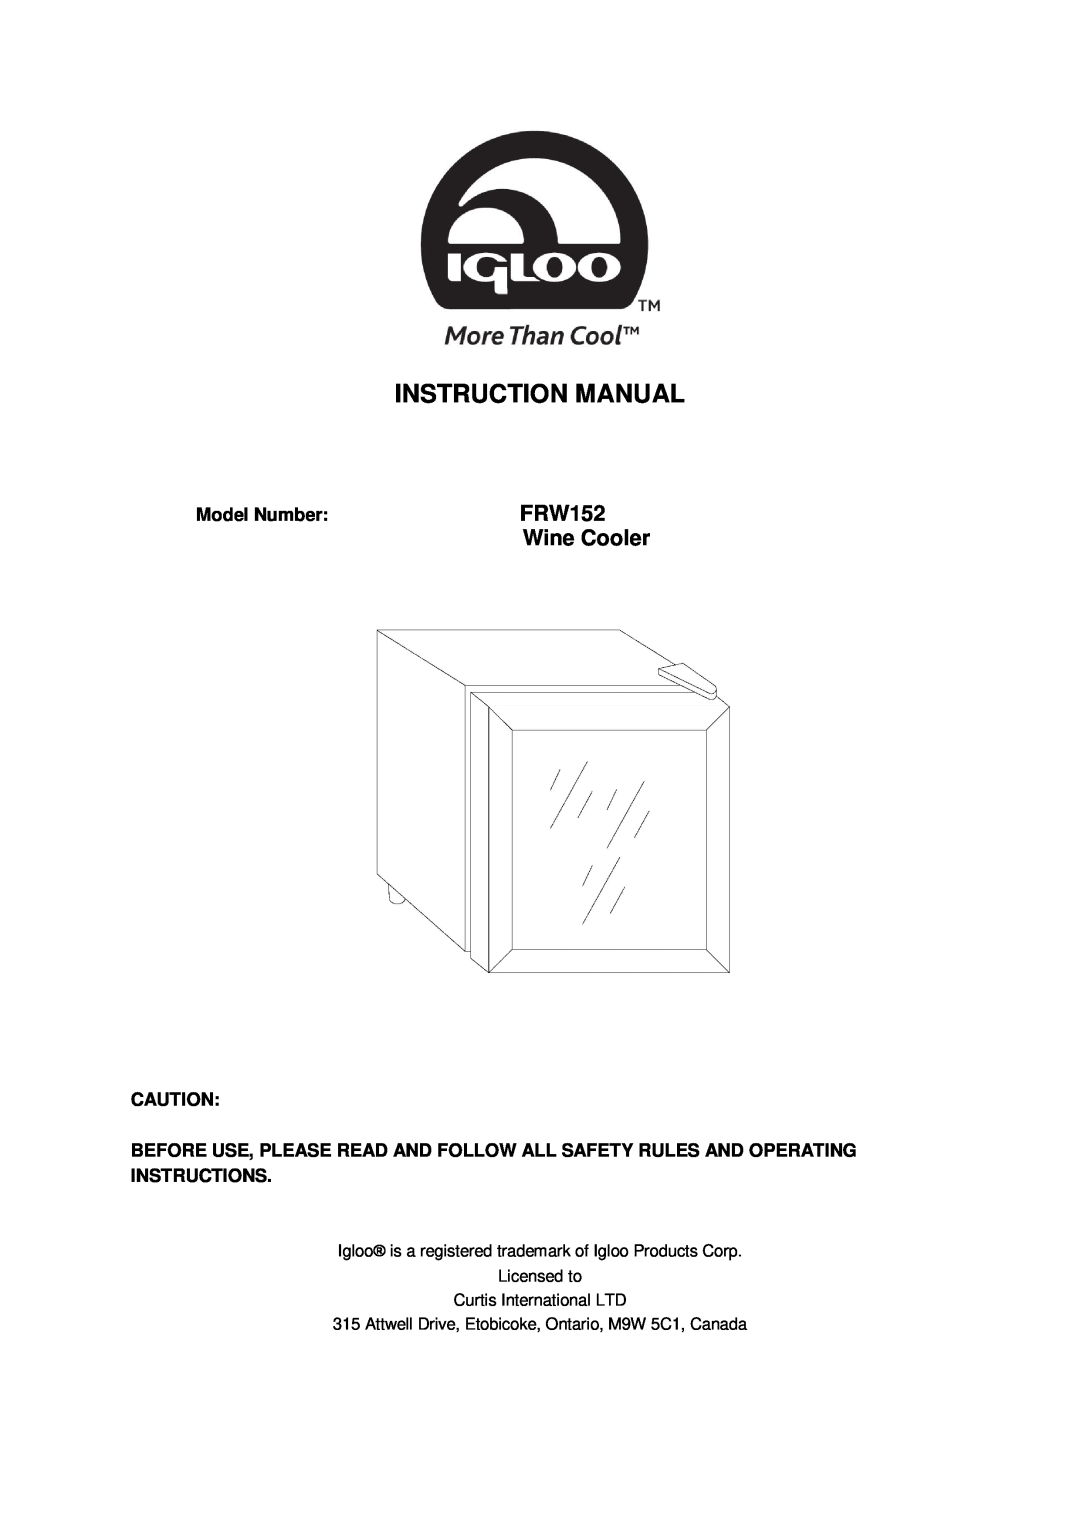 Igloo FRW152 instruction manual Instruction Manual, Wine Cooler, Model Number 